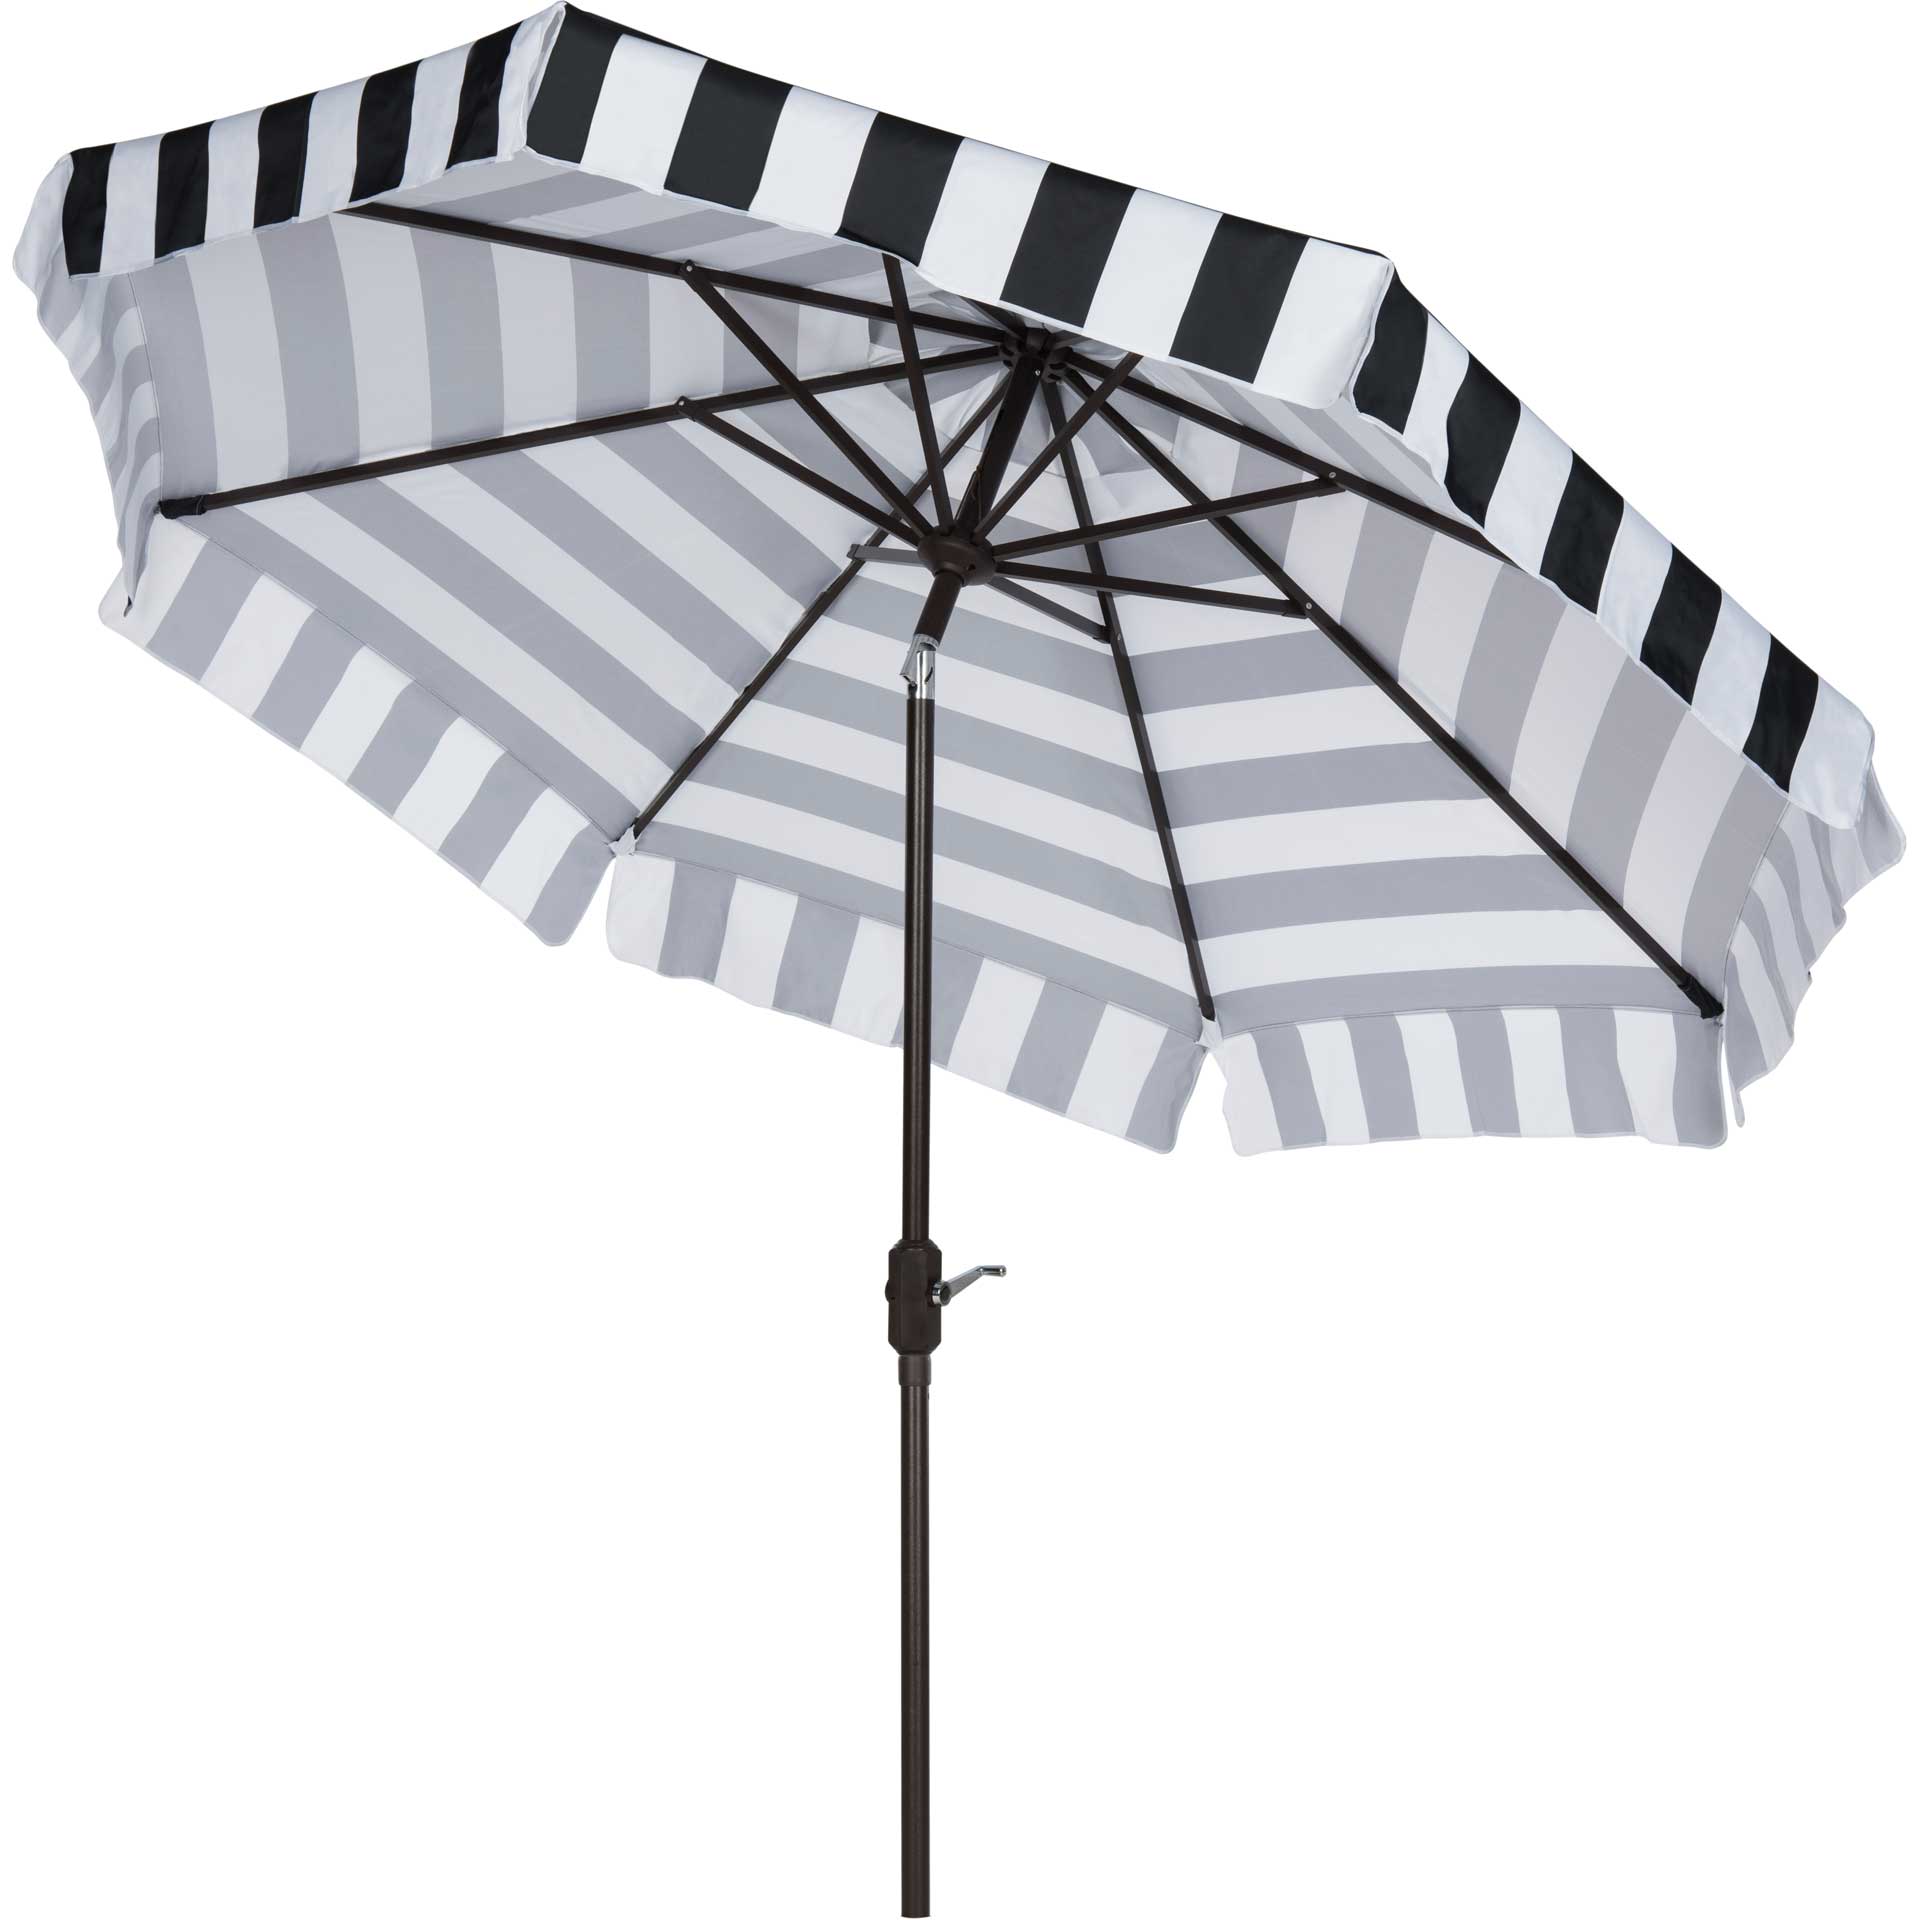 Elita Uv Resistant Auto Tilt Umbrella Black/White